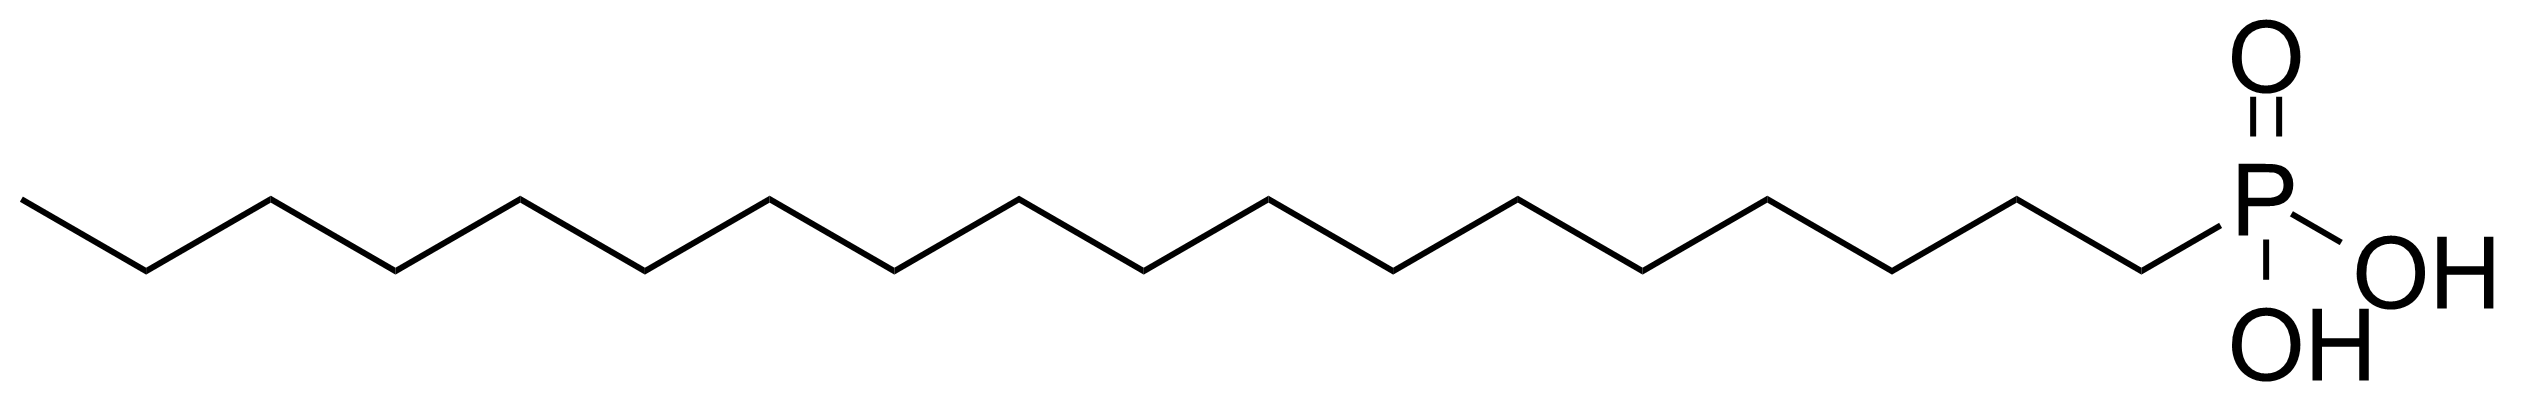 Structure of Octadecylphosphonic acid